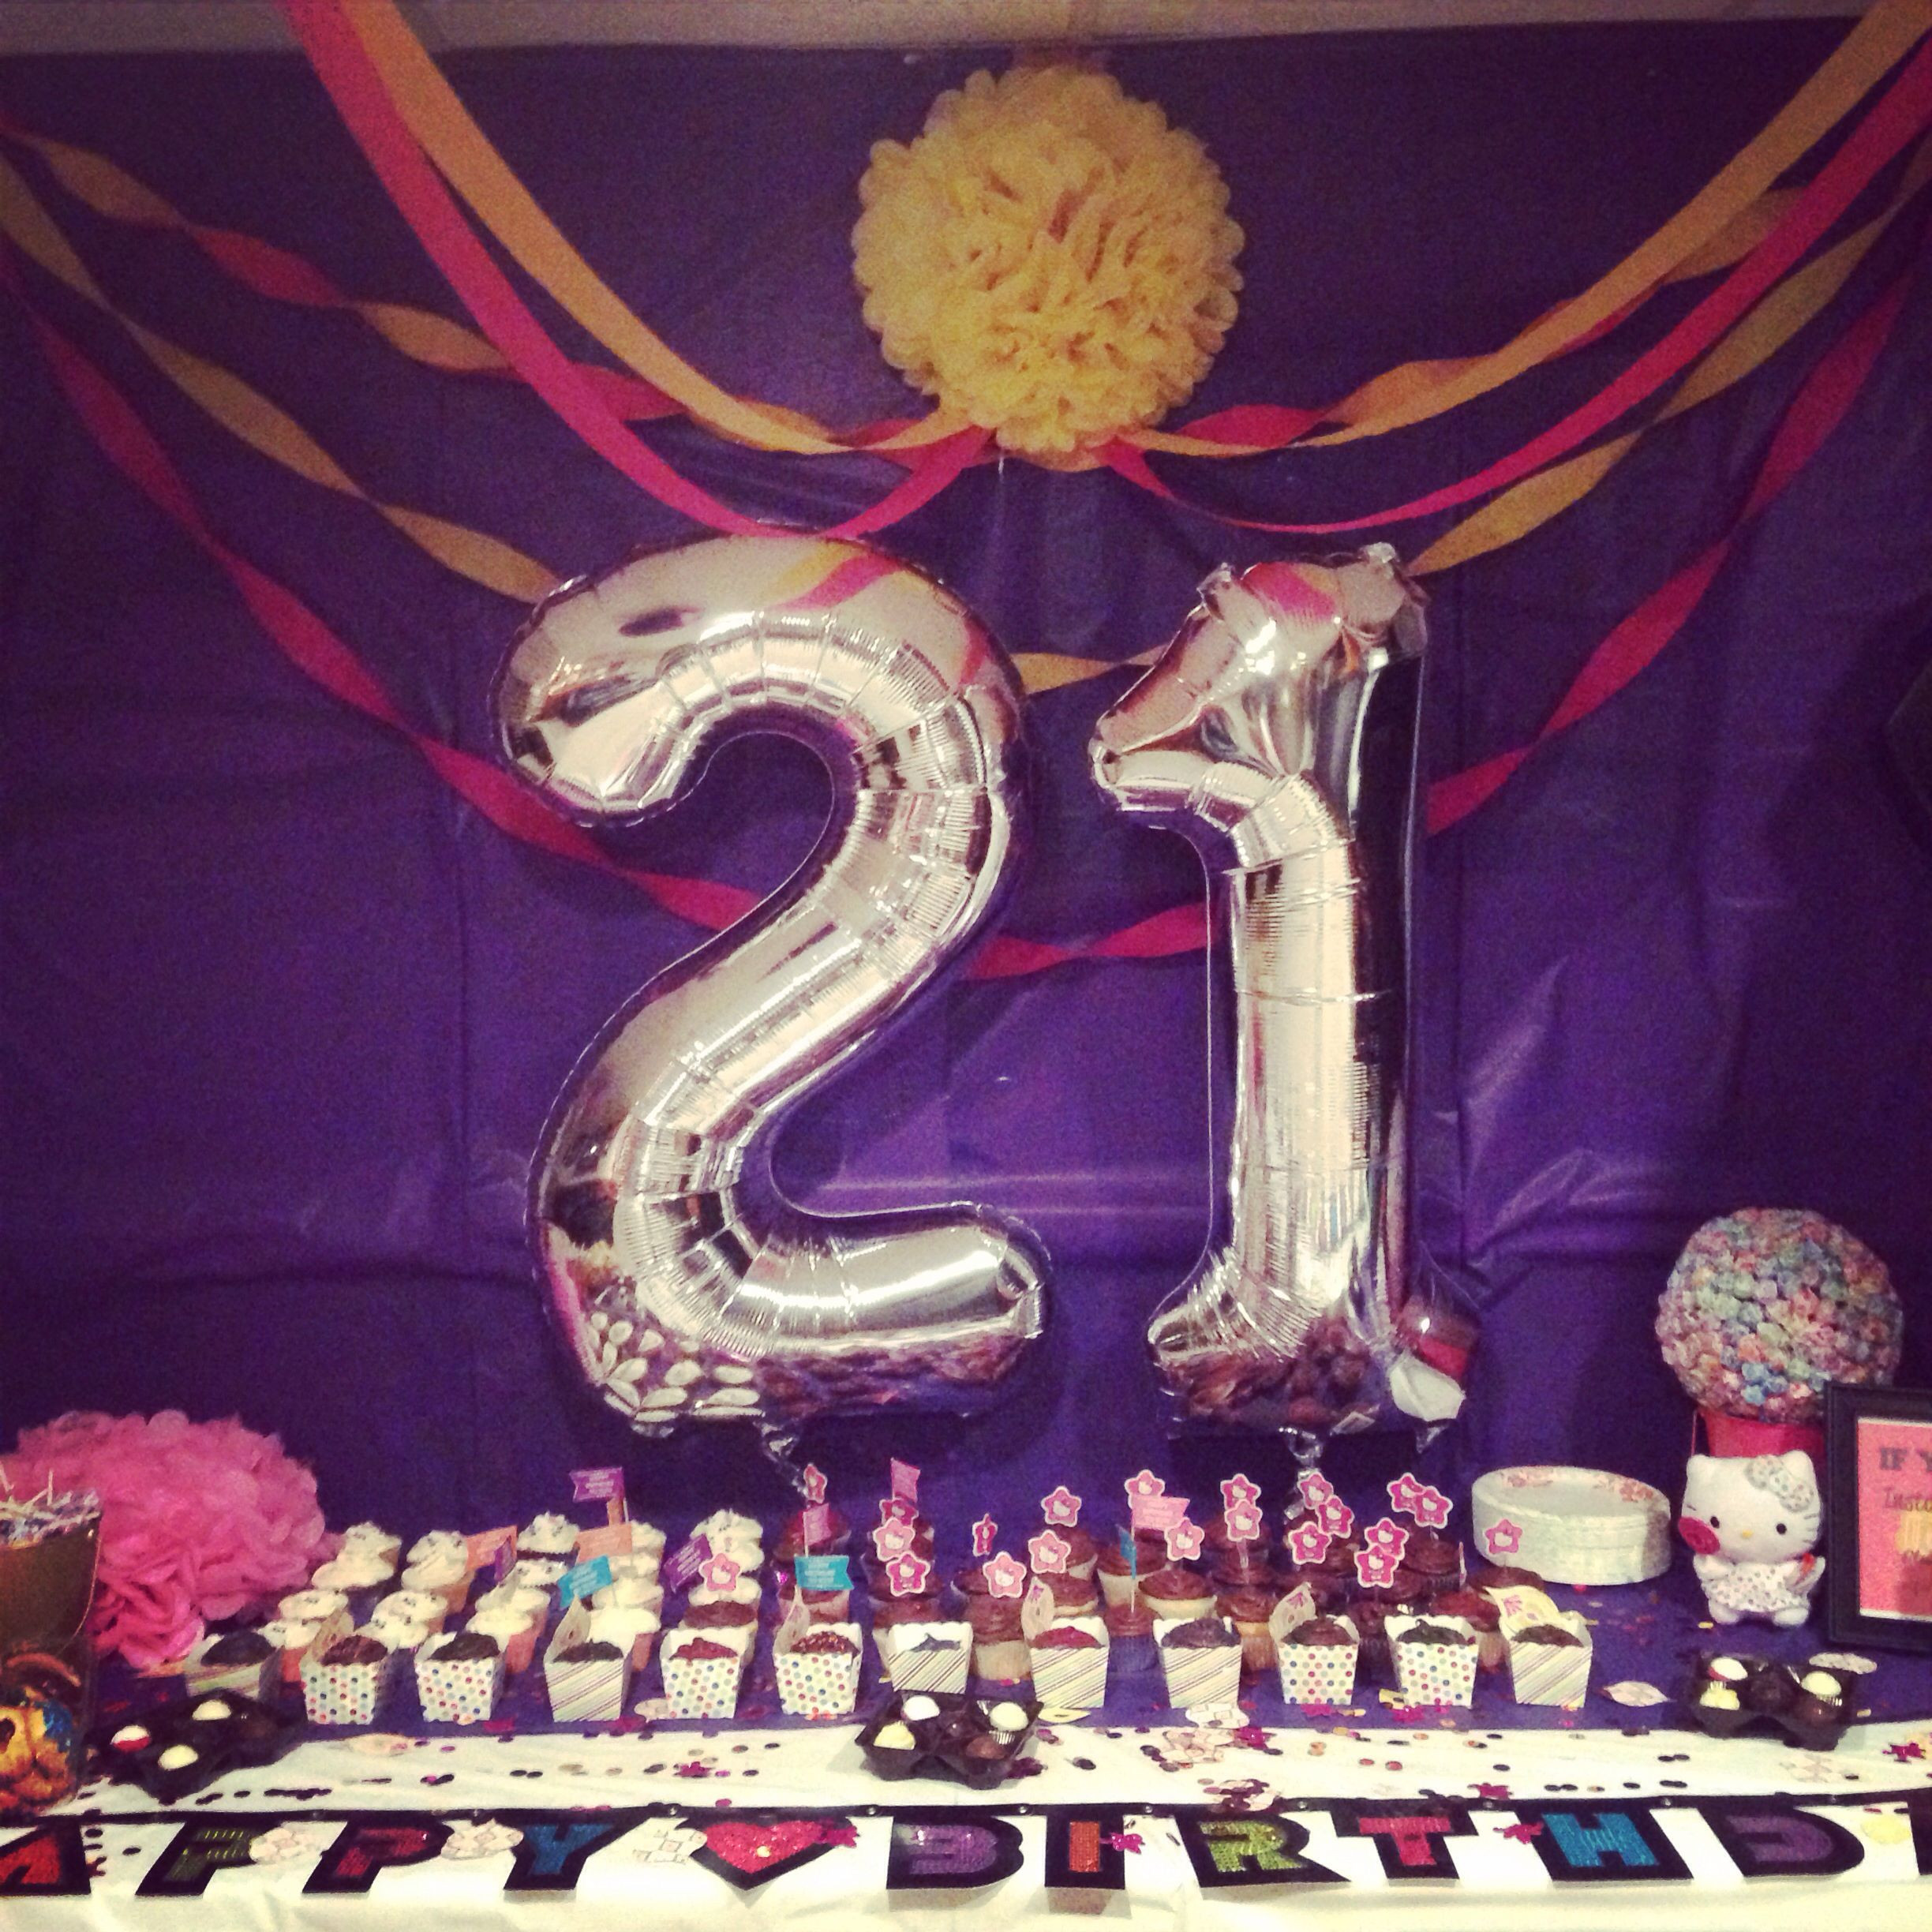 21st Birthday Party Themes
 Best 25 21st birthday decorations ideas on Pinterest